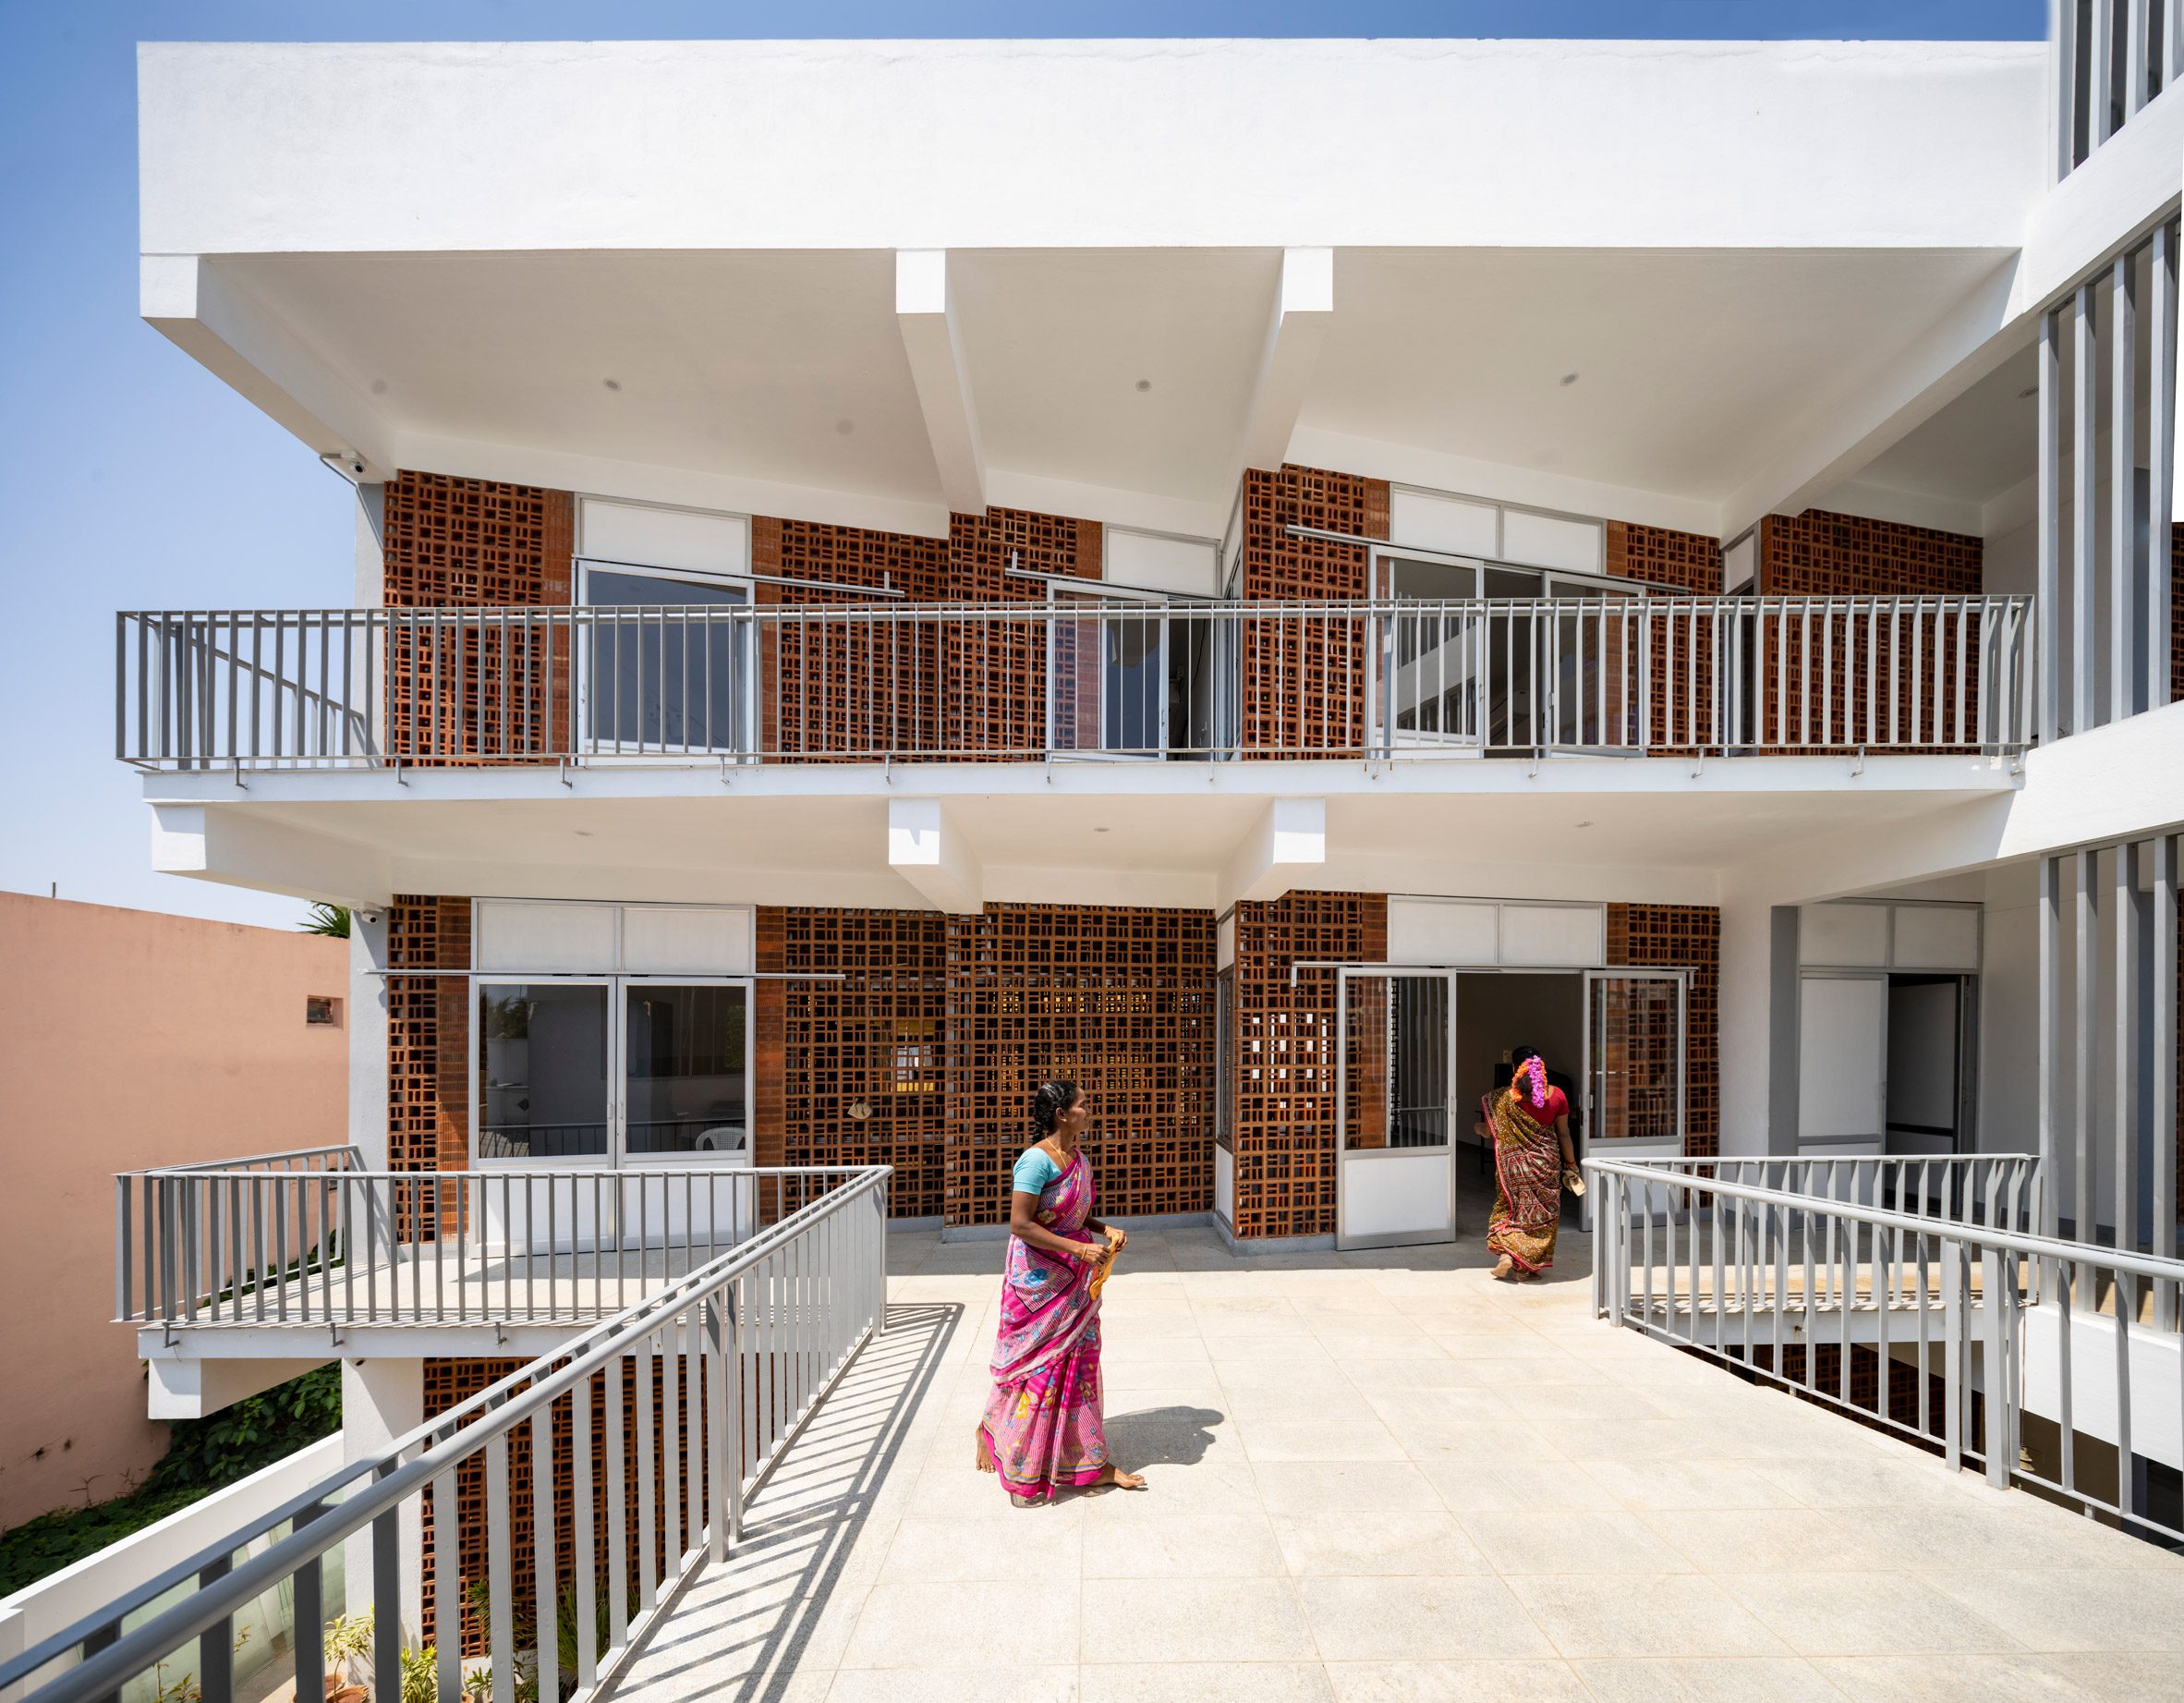 Sharana daycare by Anupama Kundoo has a brick and white painted exterior